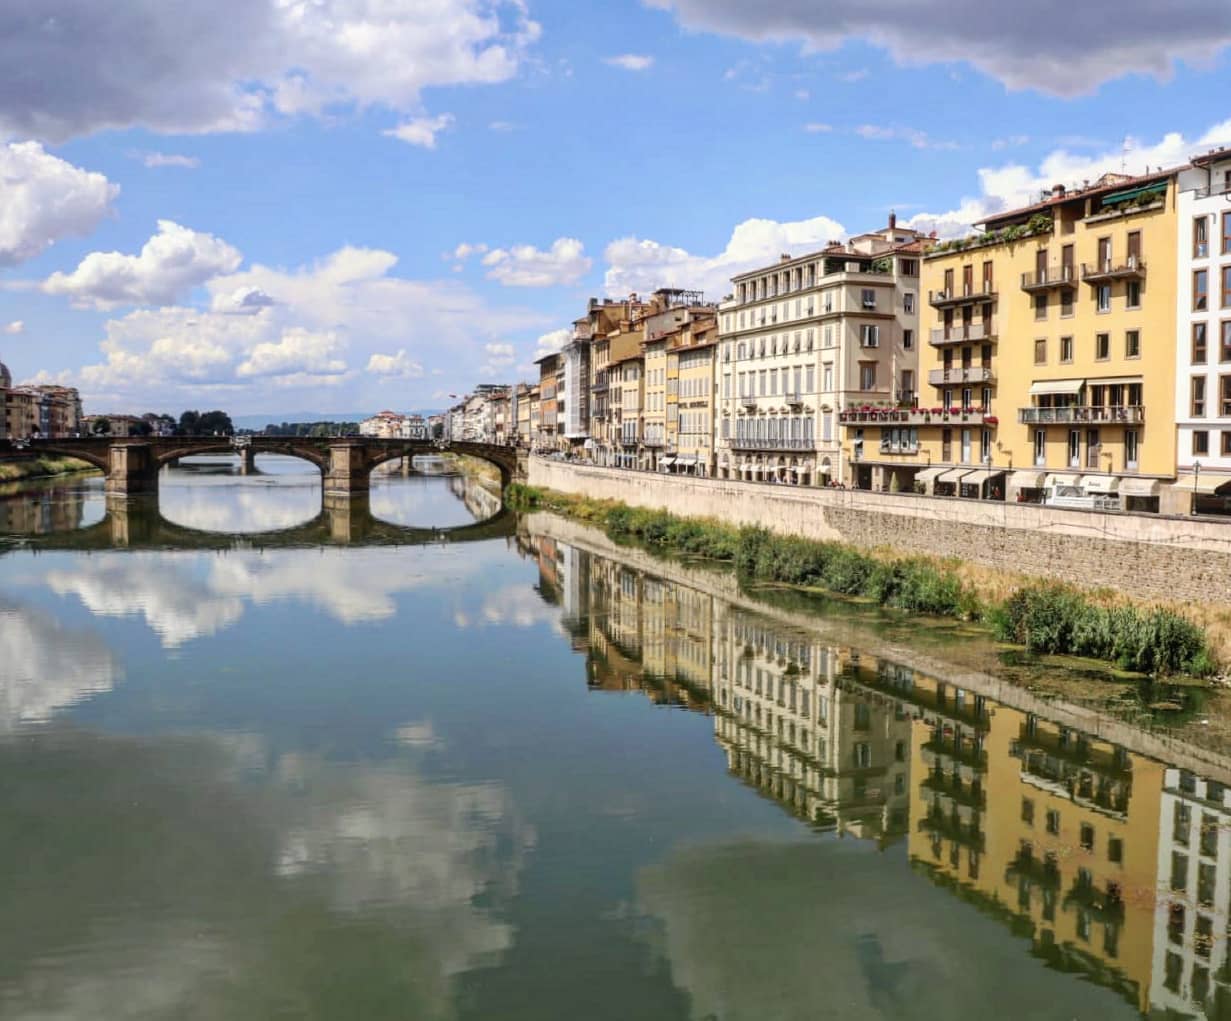 Arno, vista da Ponte Vecchio, Firenze, Toscana, Italia
(Arno river, Florence, Italy)
.
#volgoitalia #igersitalia #yallersitalia #ig_firenze
.
Photo @grtrsm